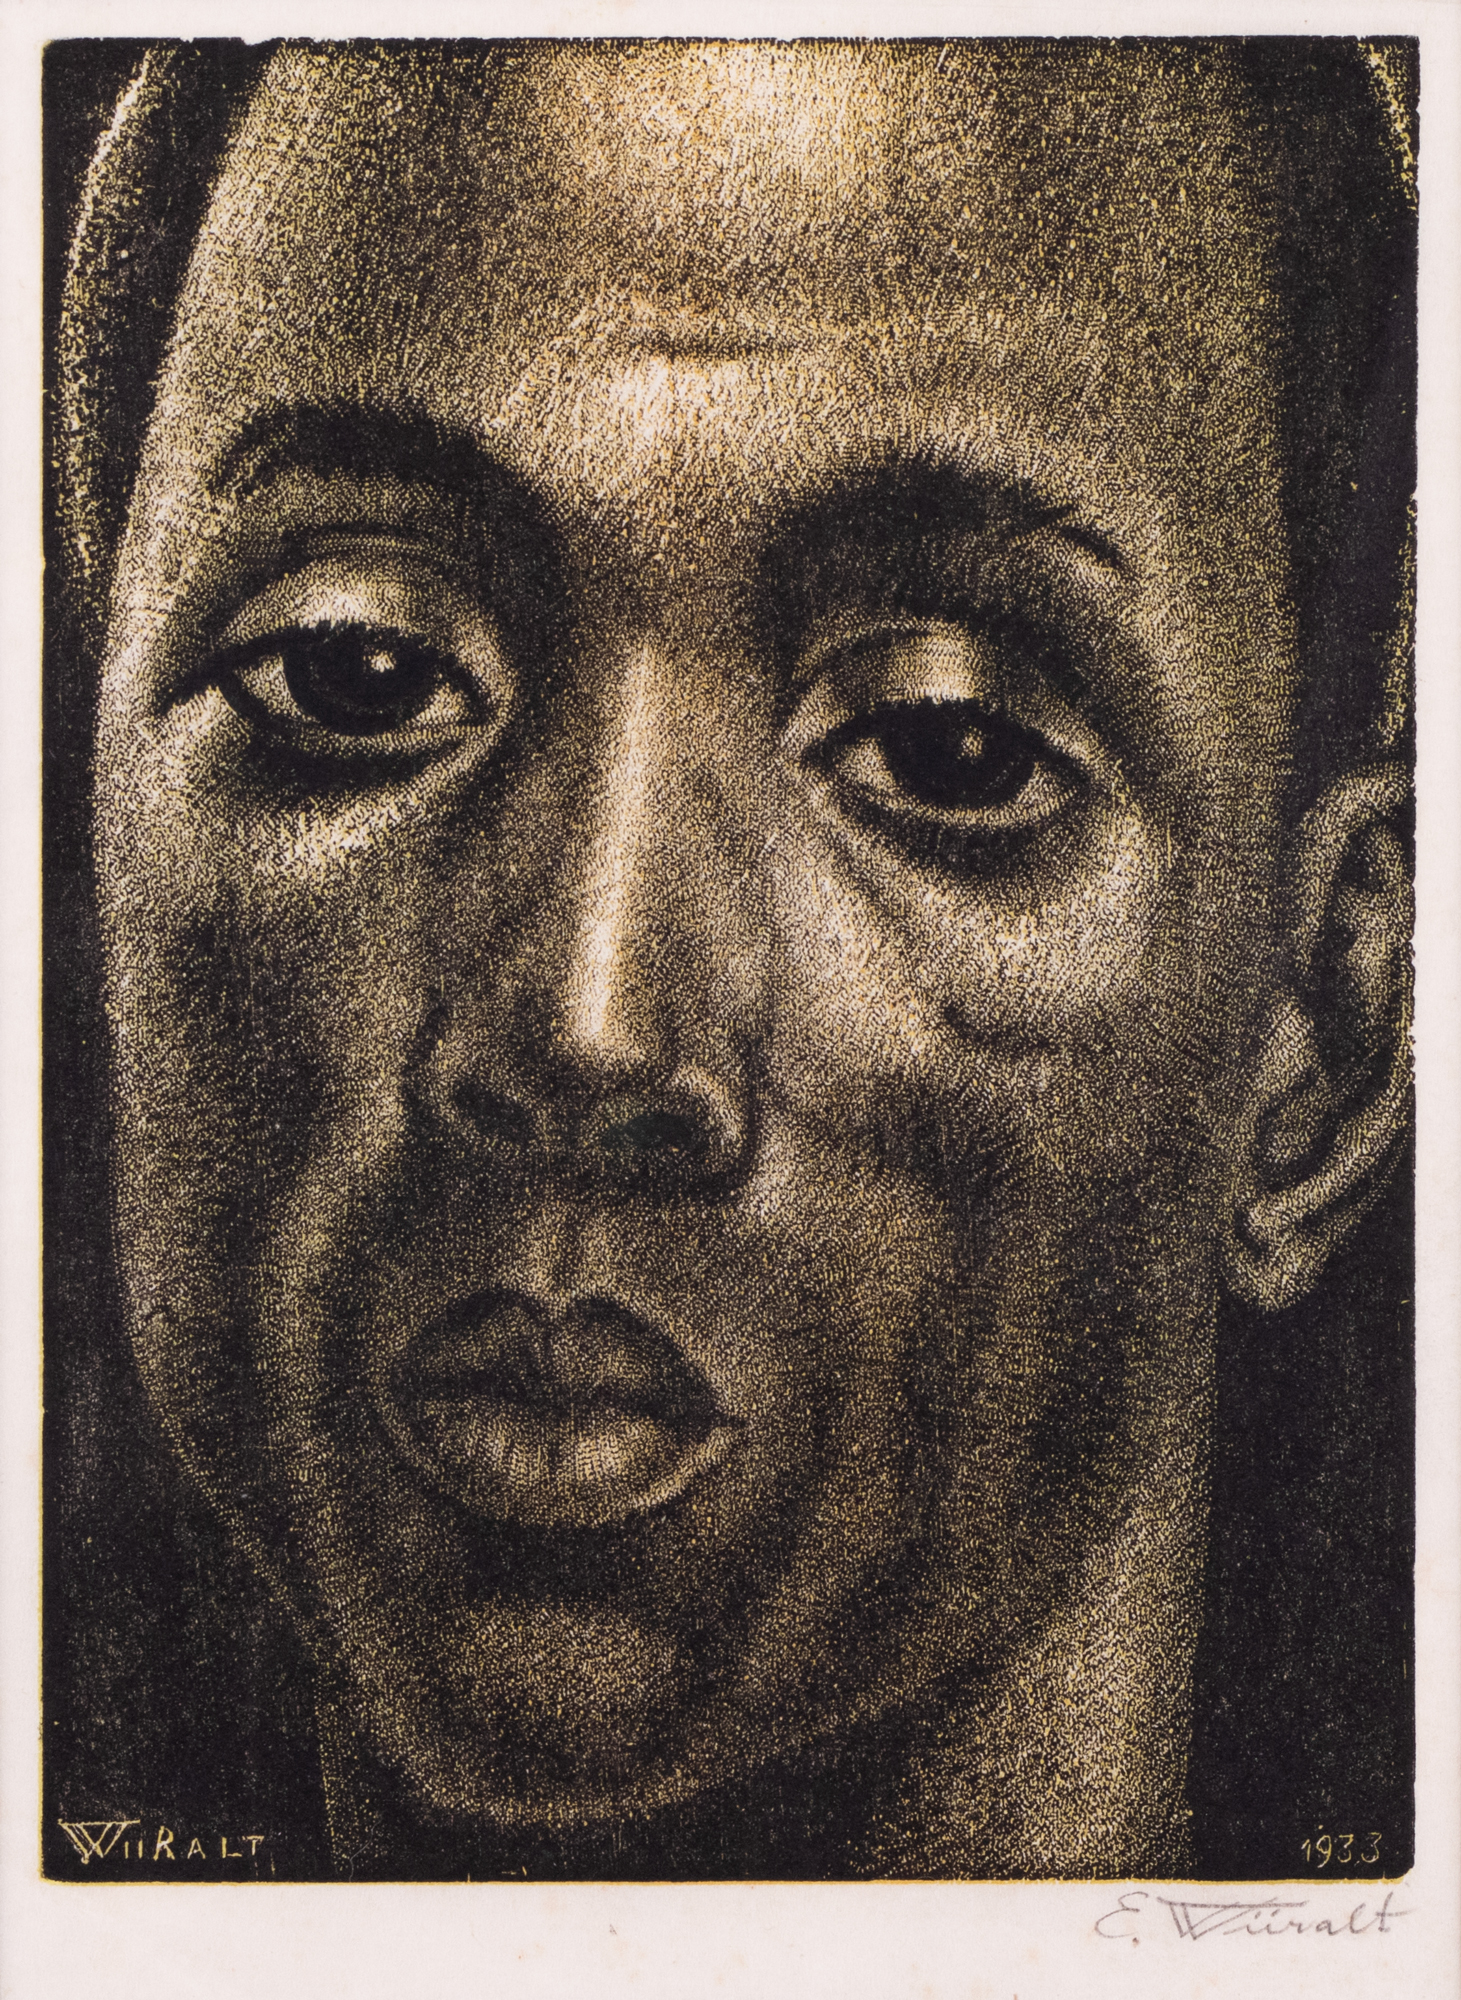 Eduard Wiiralt "Museological title: Head of a Negro"